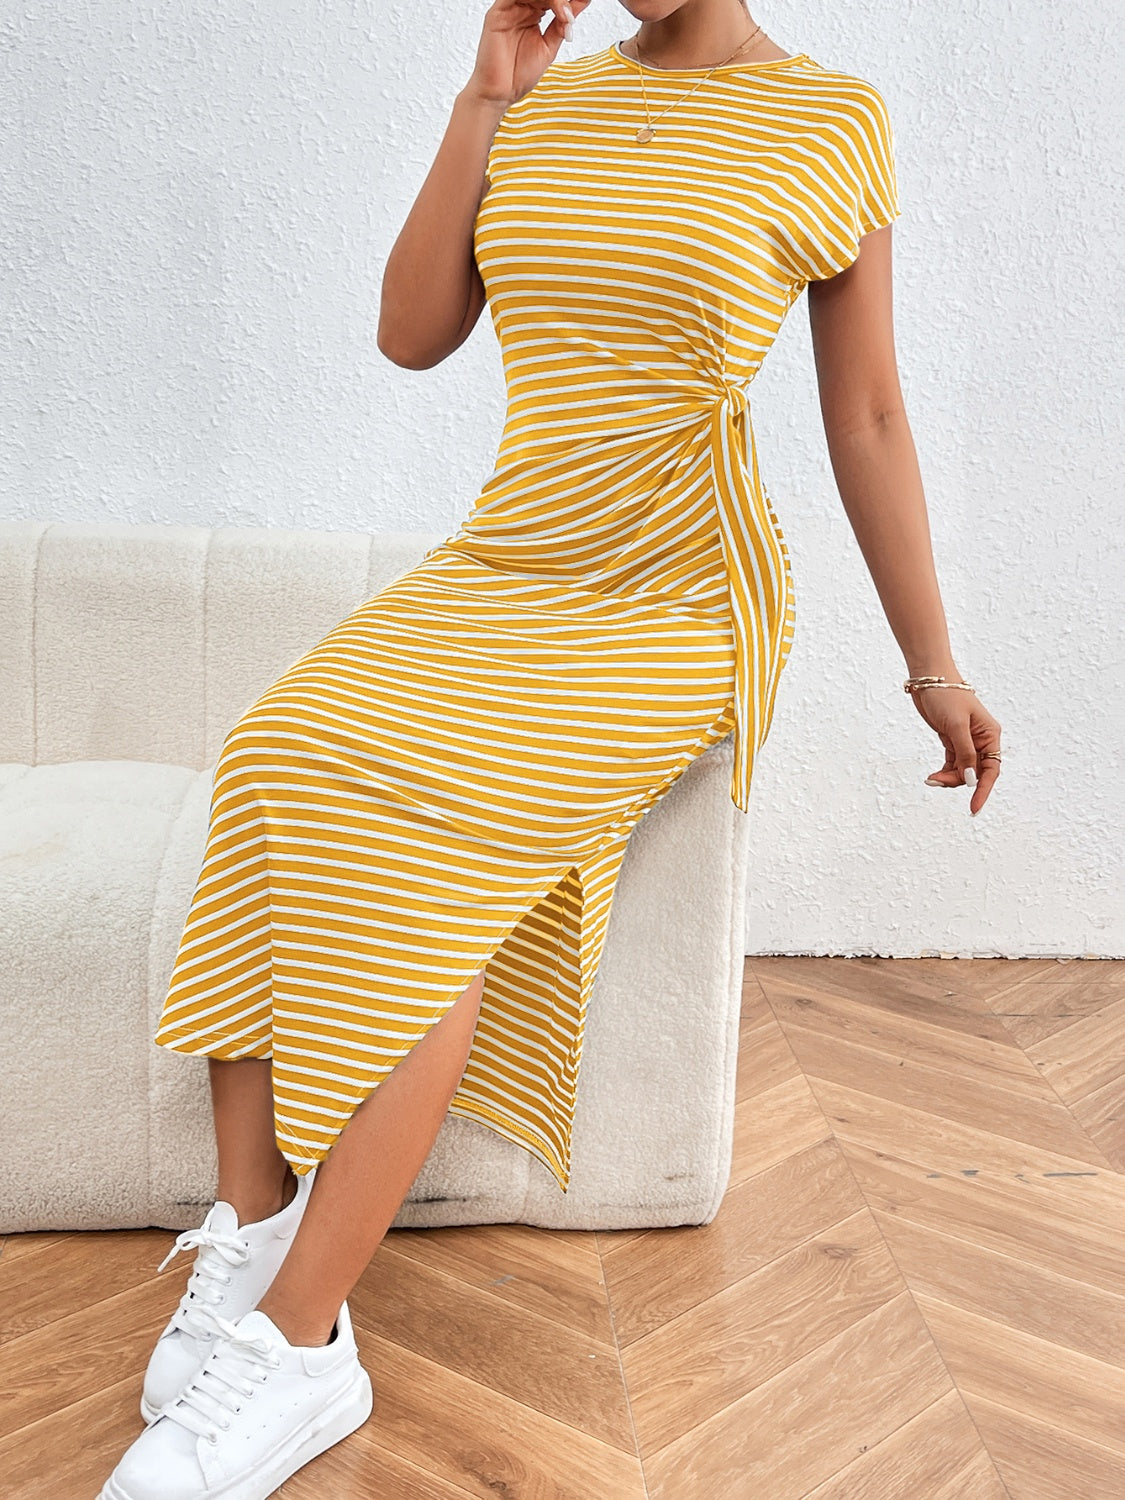 TEEK - Tied Striped Round Neck Short Sleeve Tee Dress DRESS TEEK Trend Yellow S 